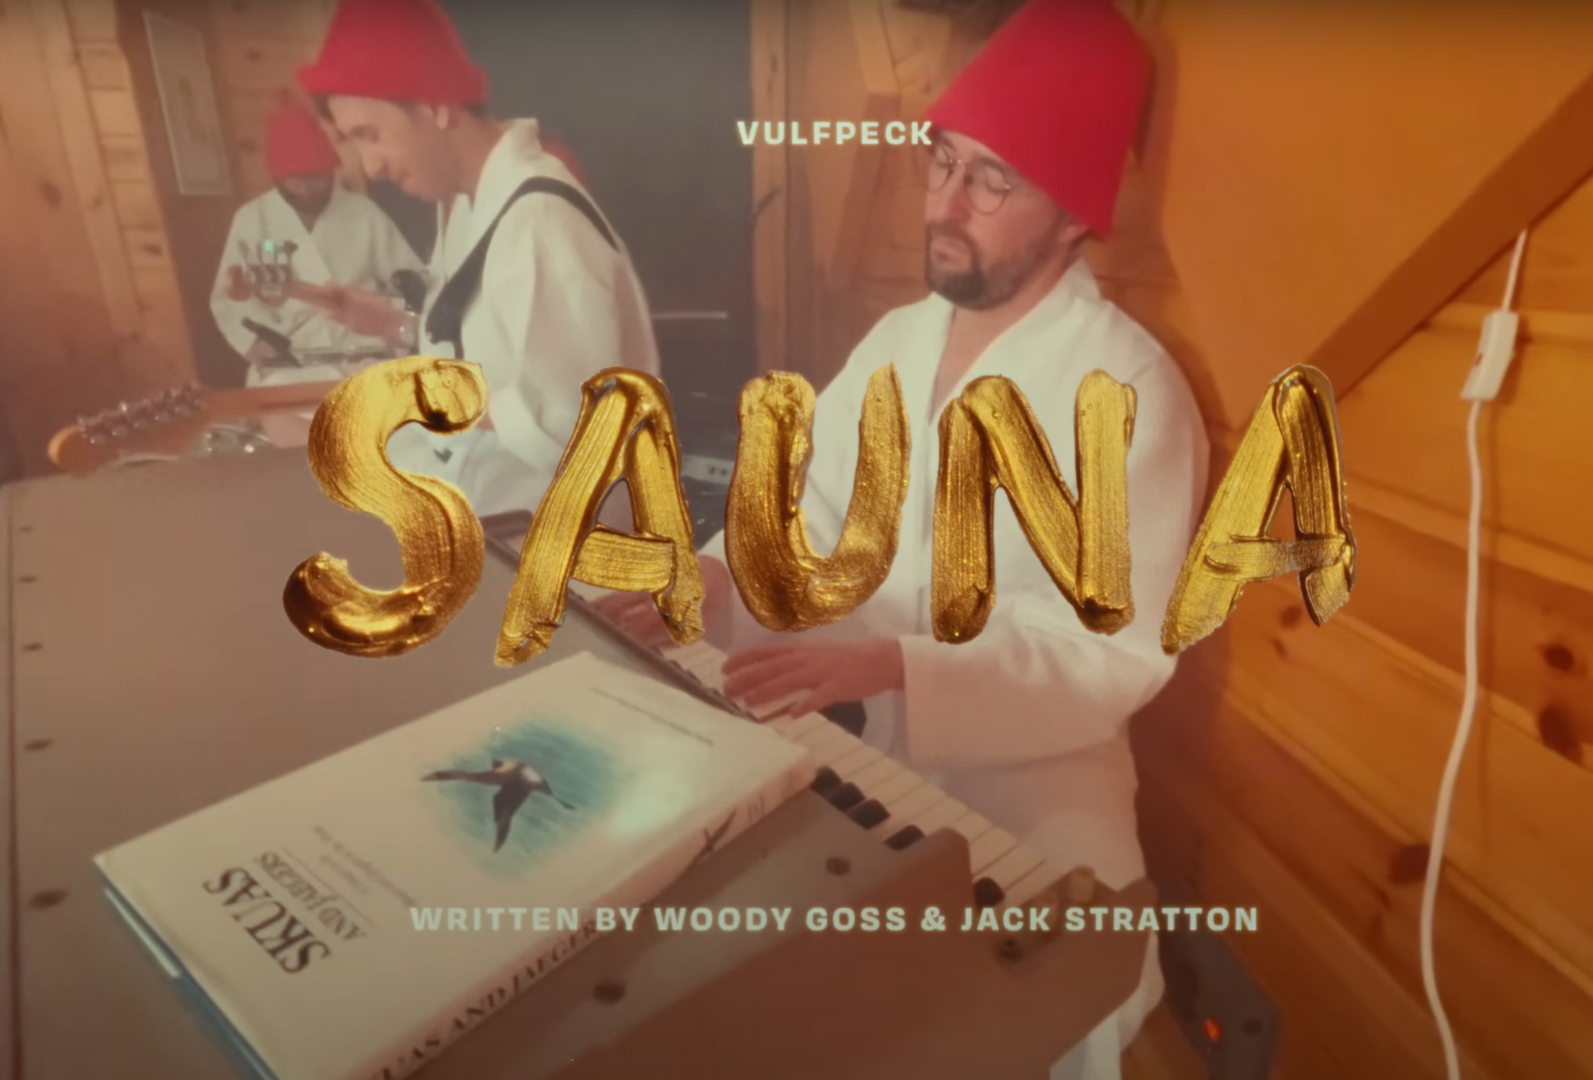 Vanguard + Vulfpeck - V44S gen2 Mic Featured in New "Sauna" Music Video